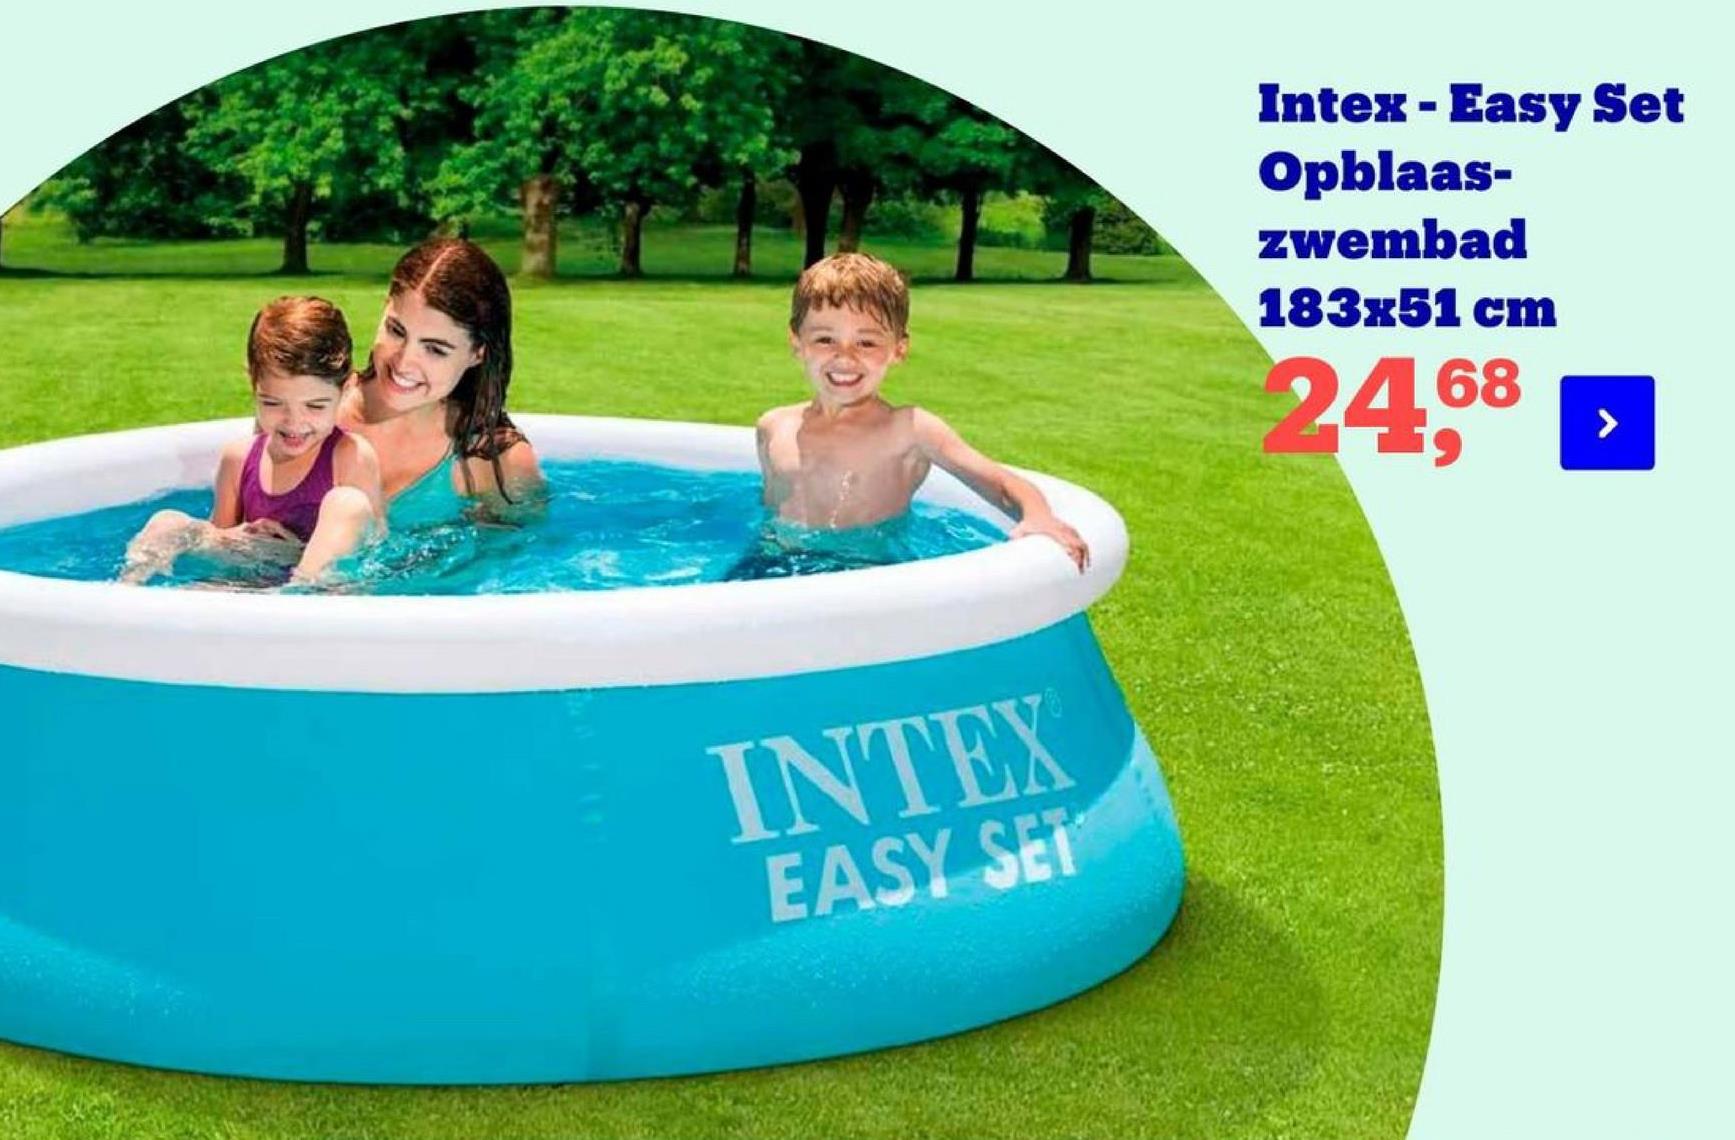 Intex - Easy Set
Opblaas-
zwembad
183x51 cm
2468
INTEX
EASY SET
